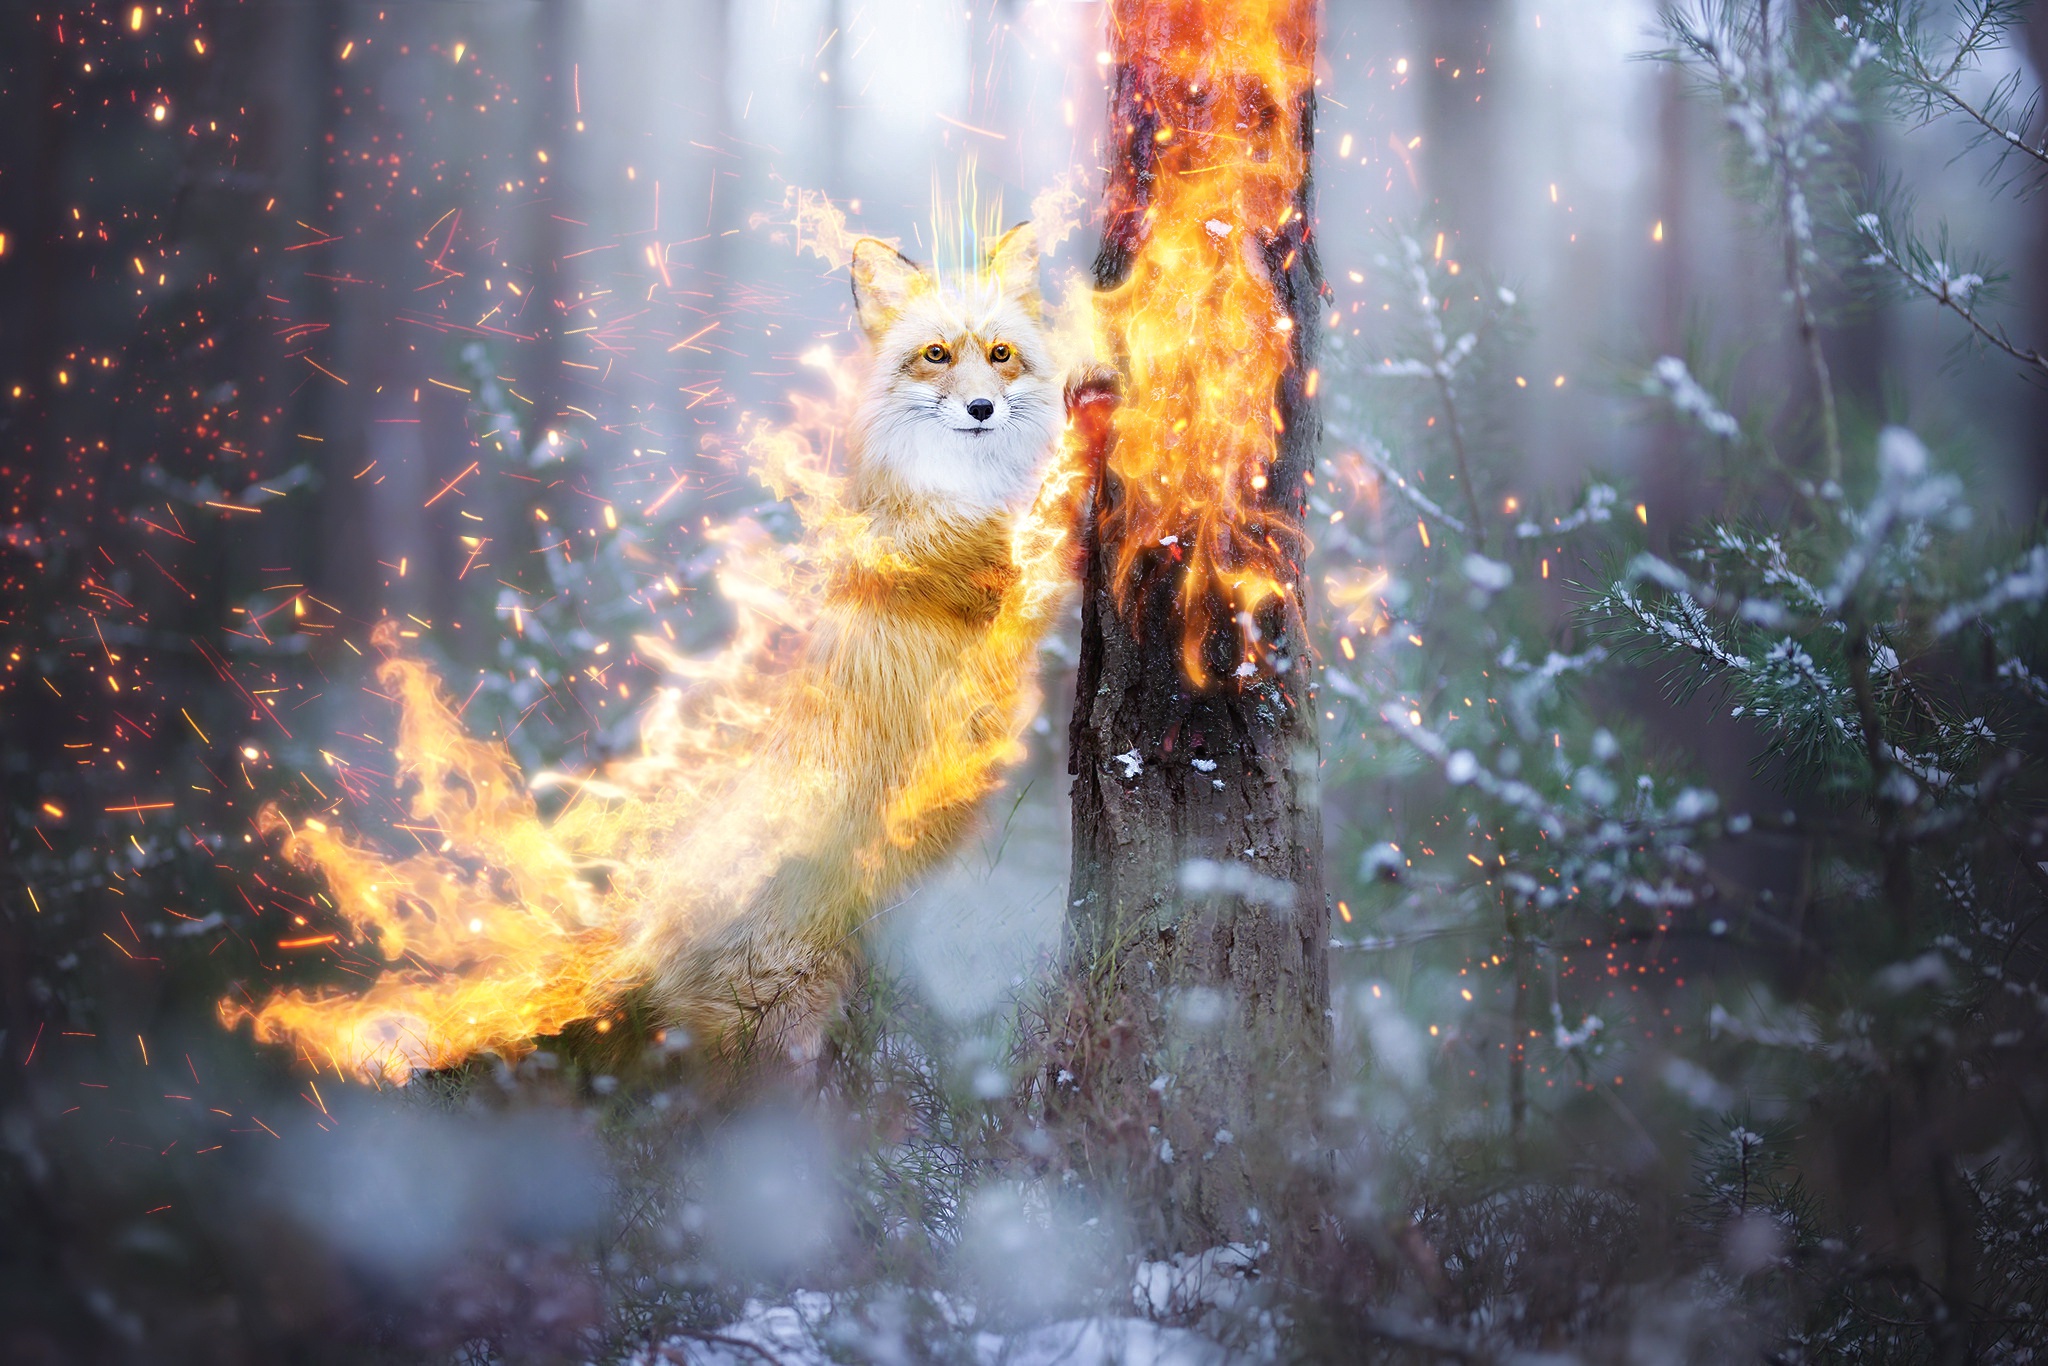 General 2048x1366 animals fire nature digital art fox